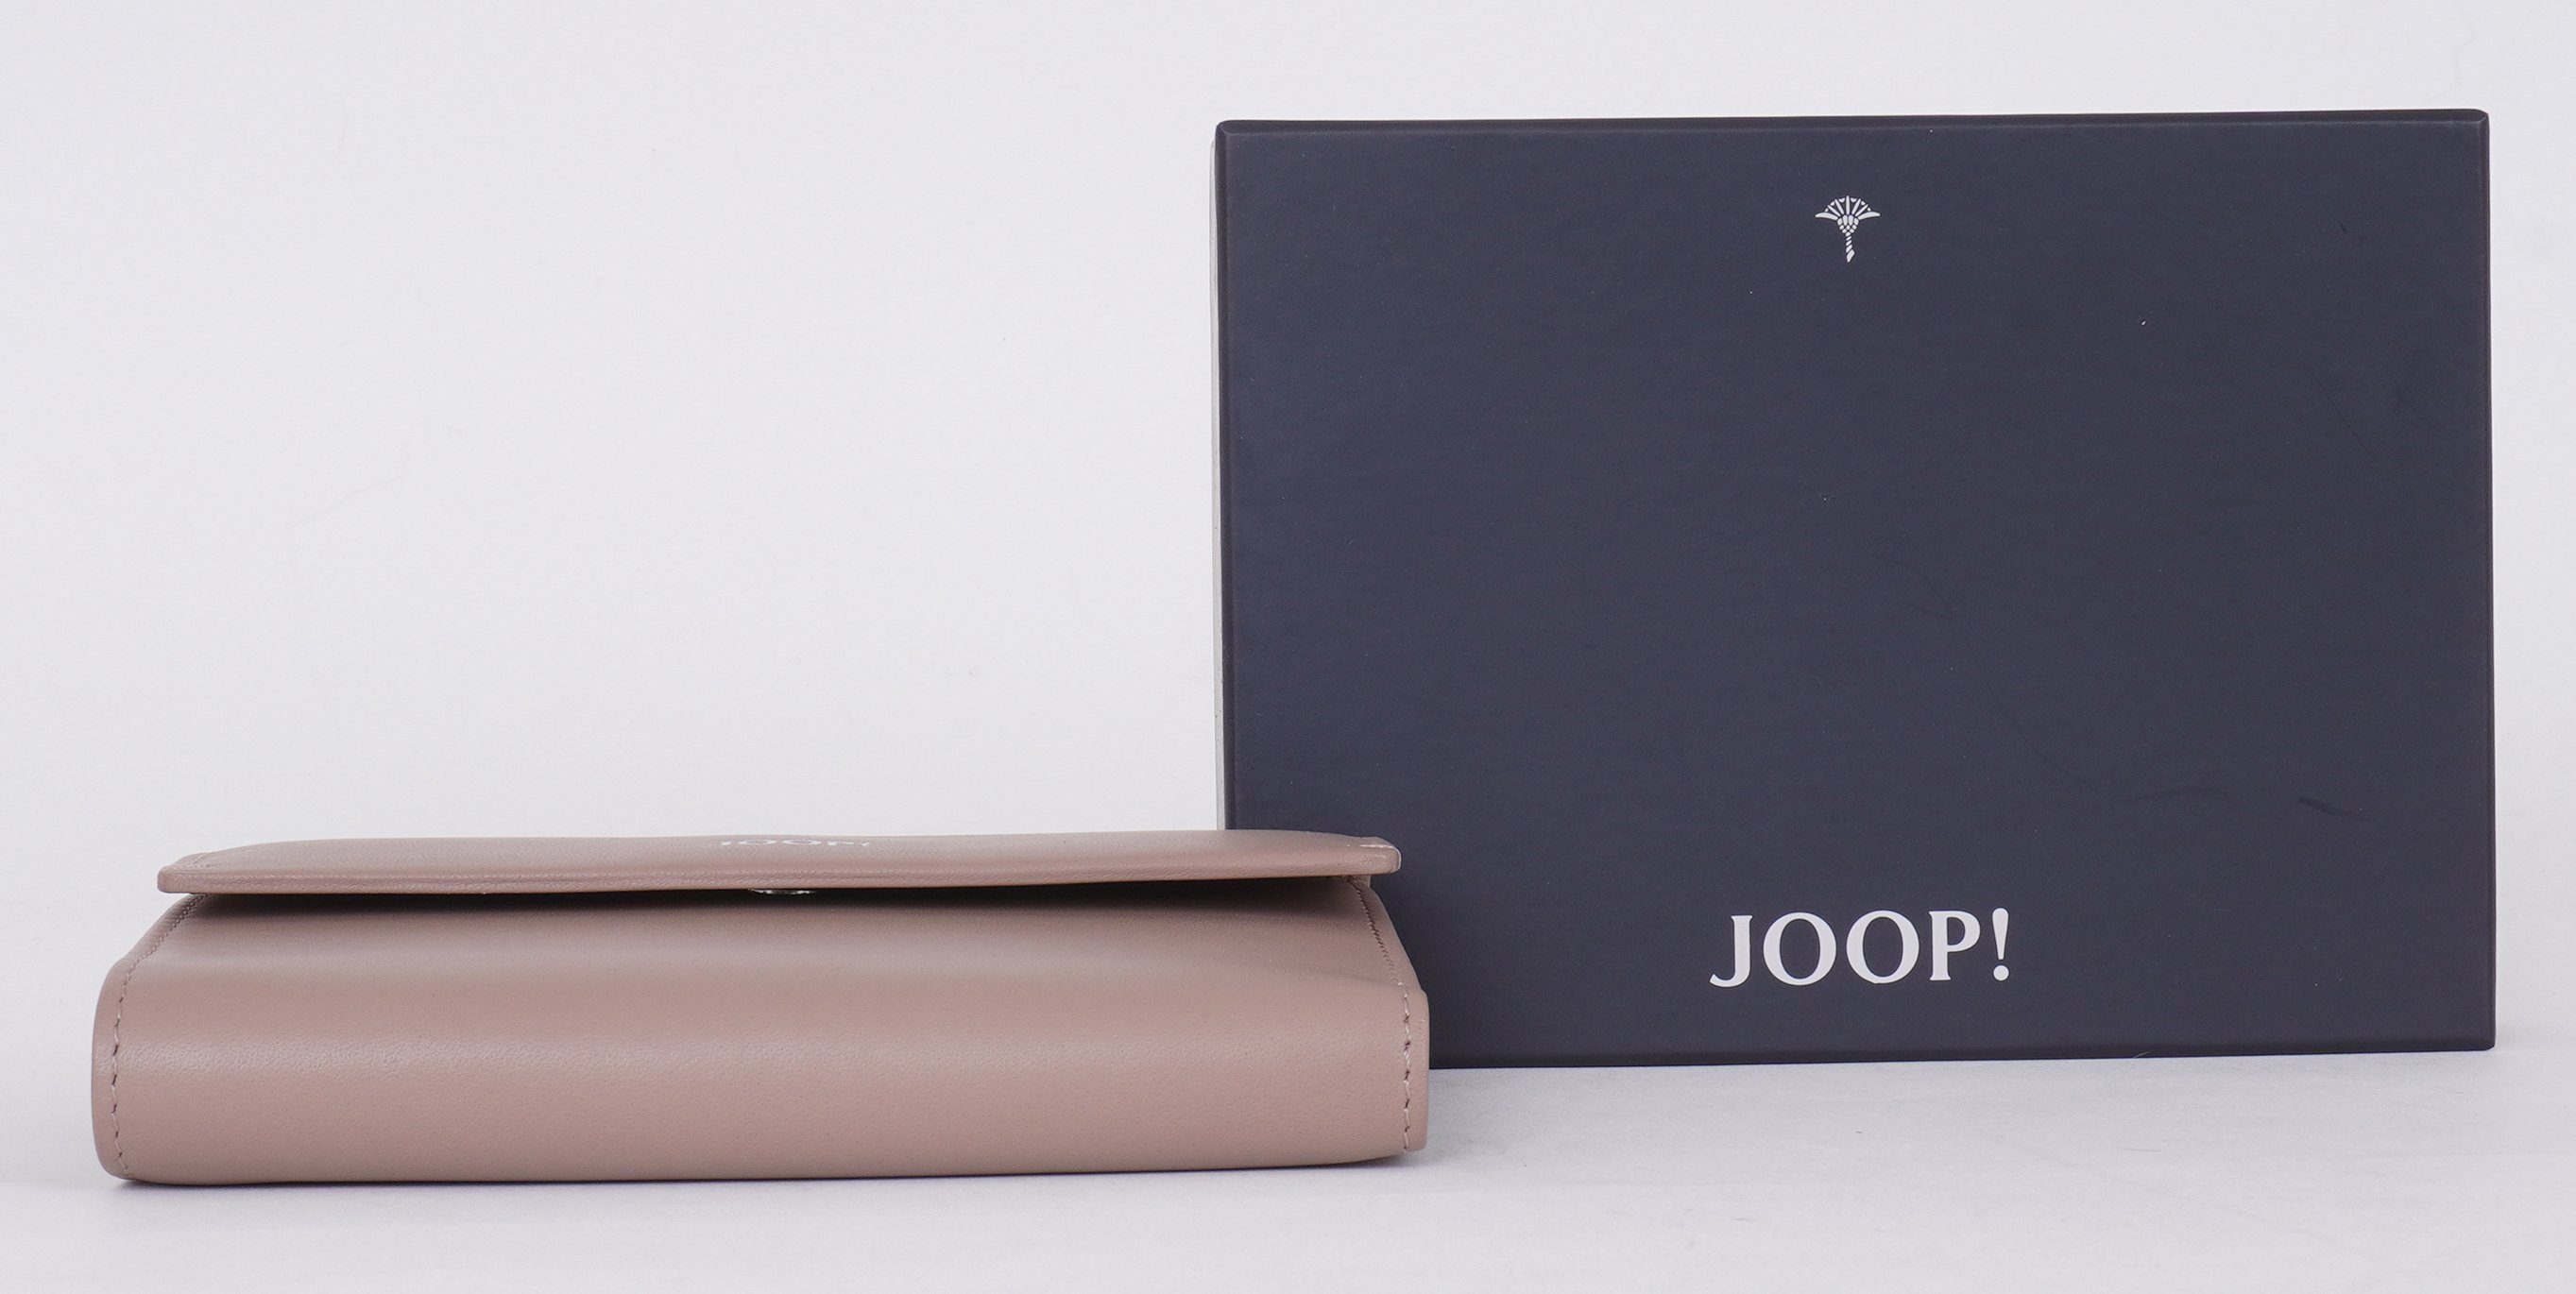 Joop! Geldbörse sofisticato 1.0 in rosa Design mh10f, purse schlichtem cosma